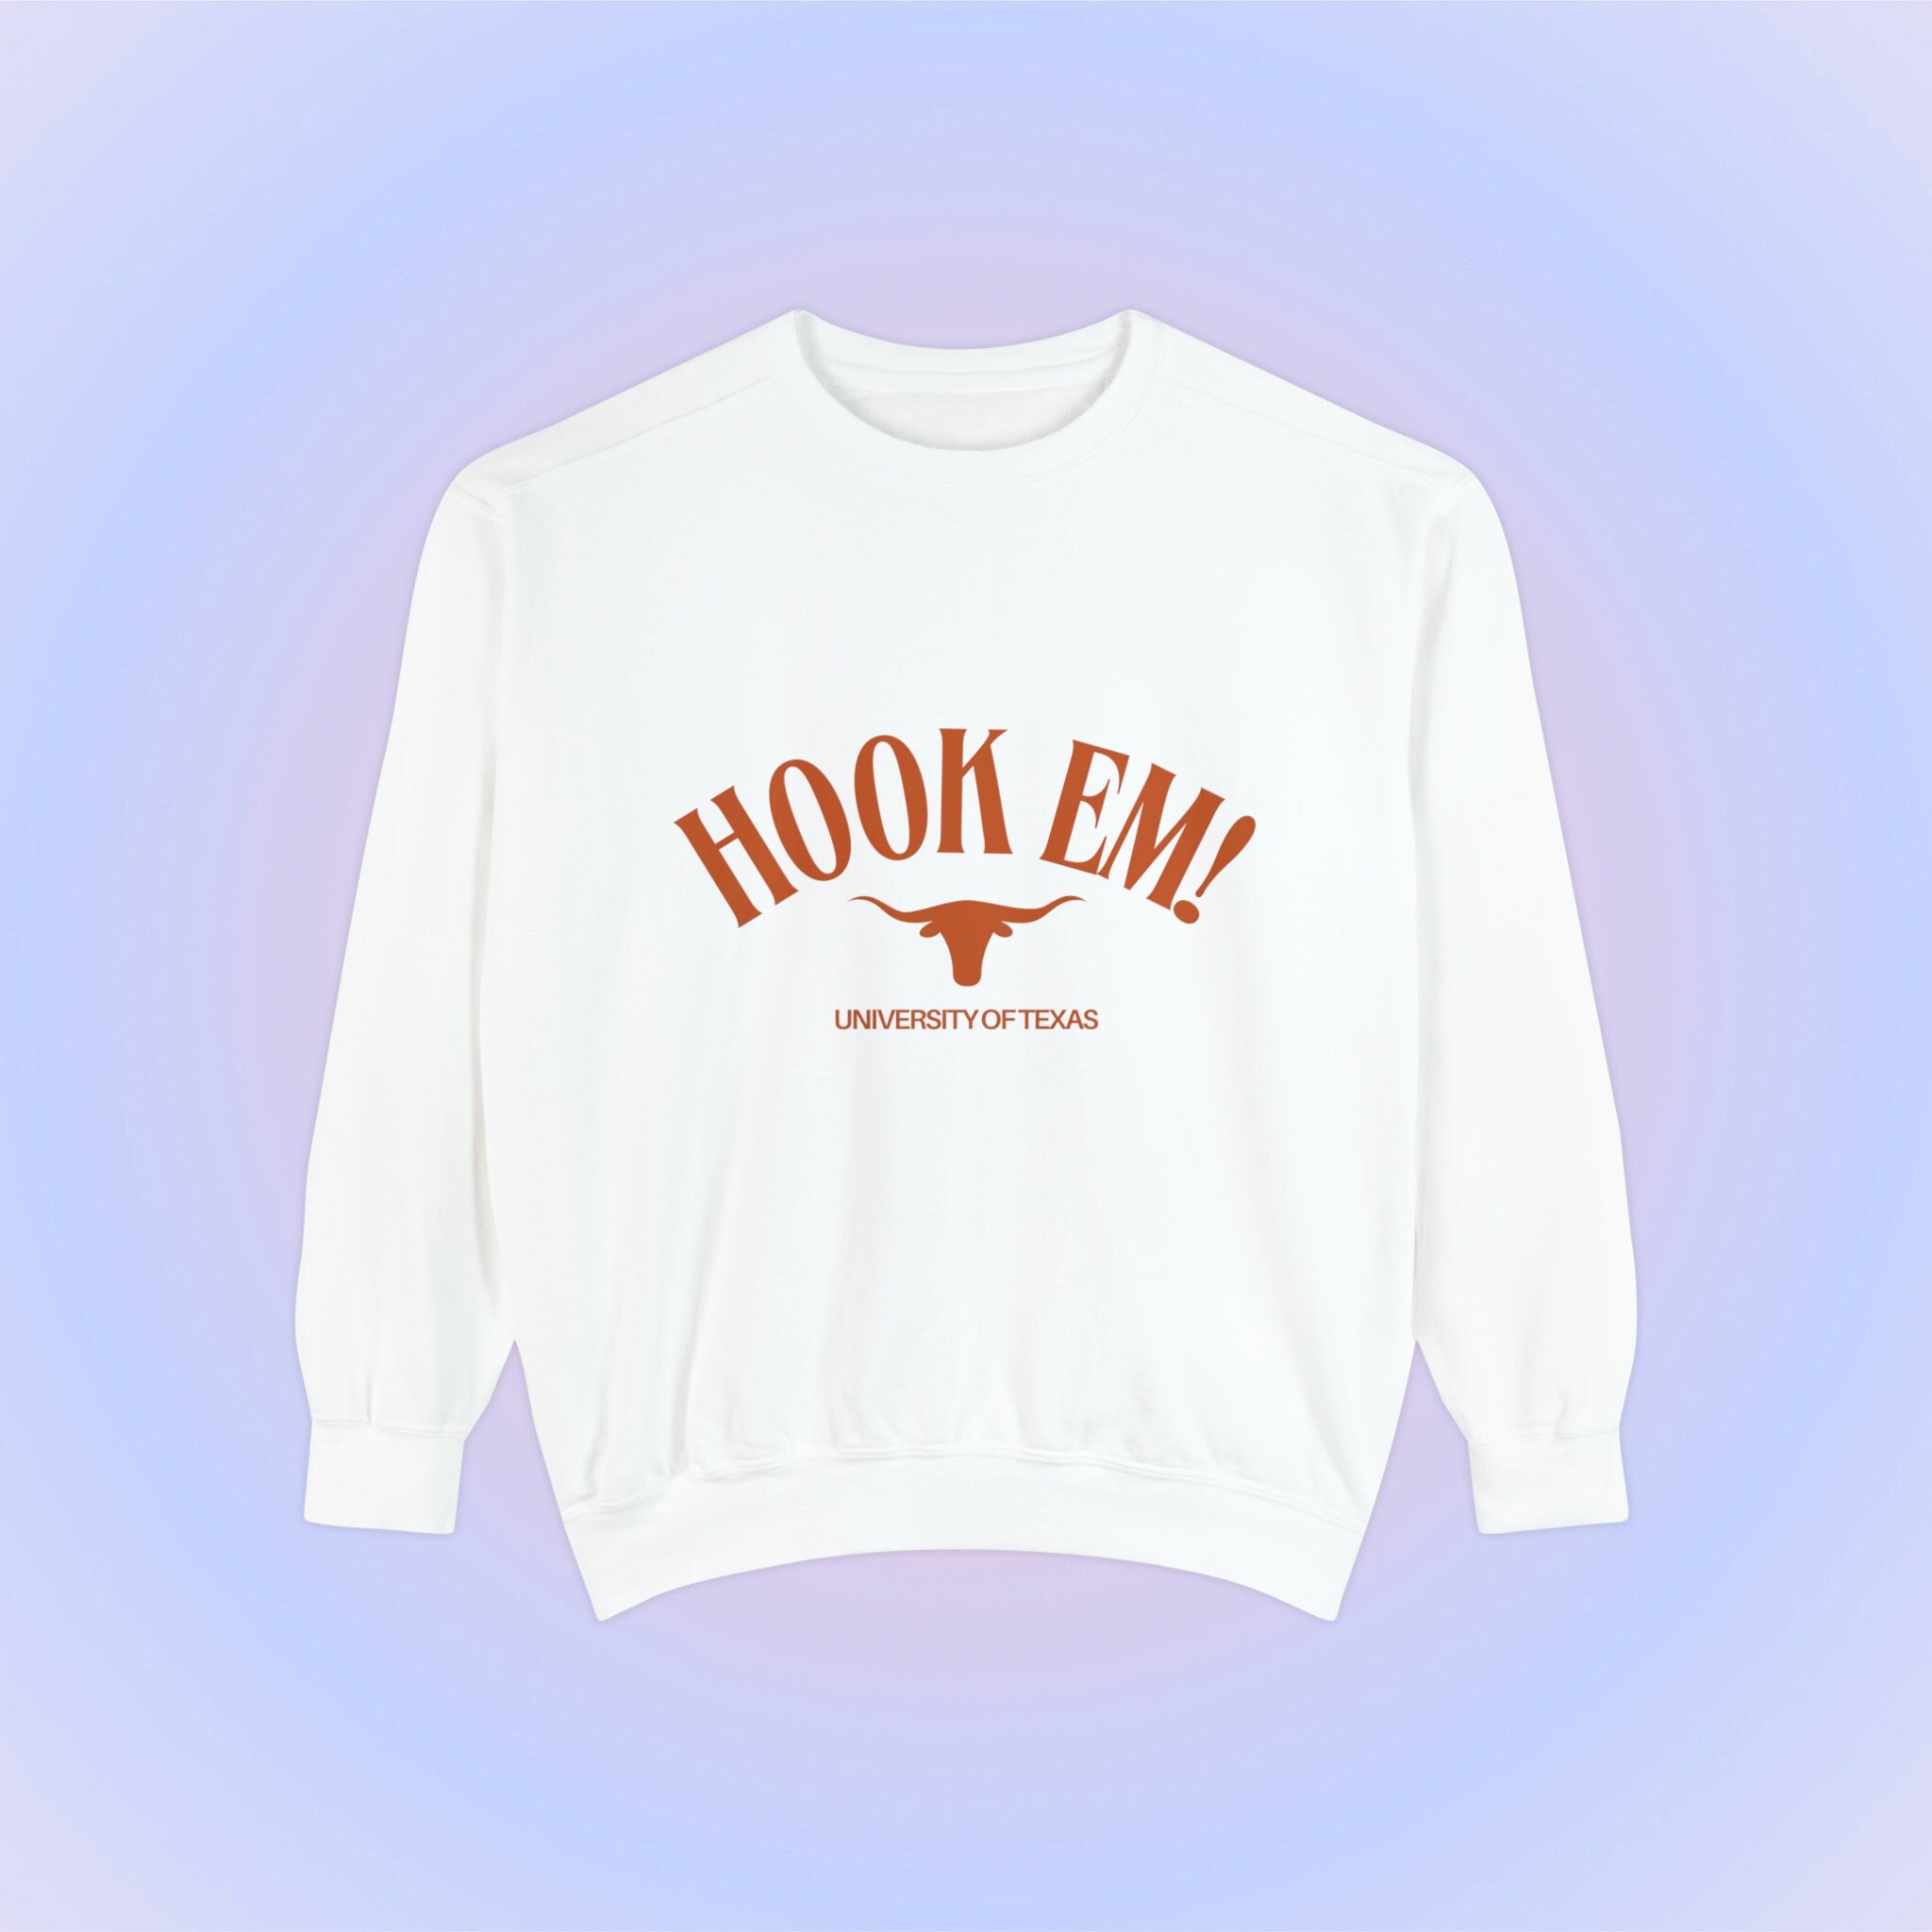 Hook 'em Horns Shirt 